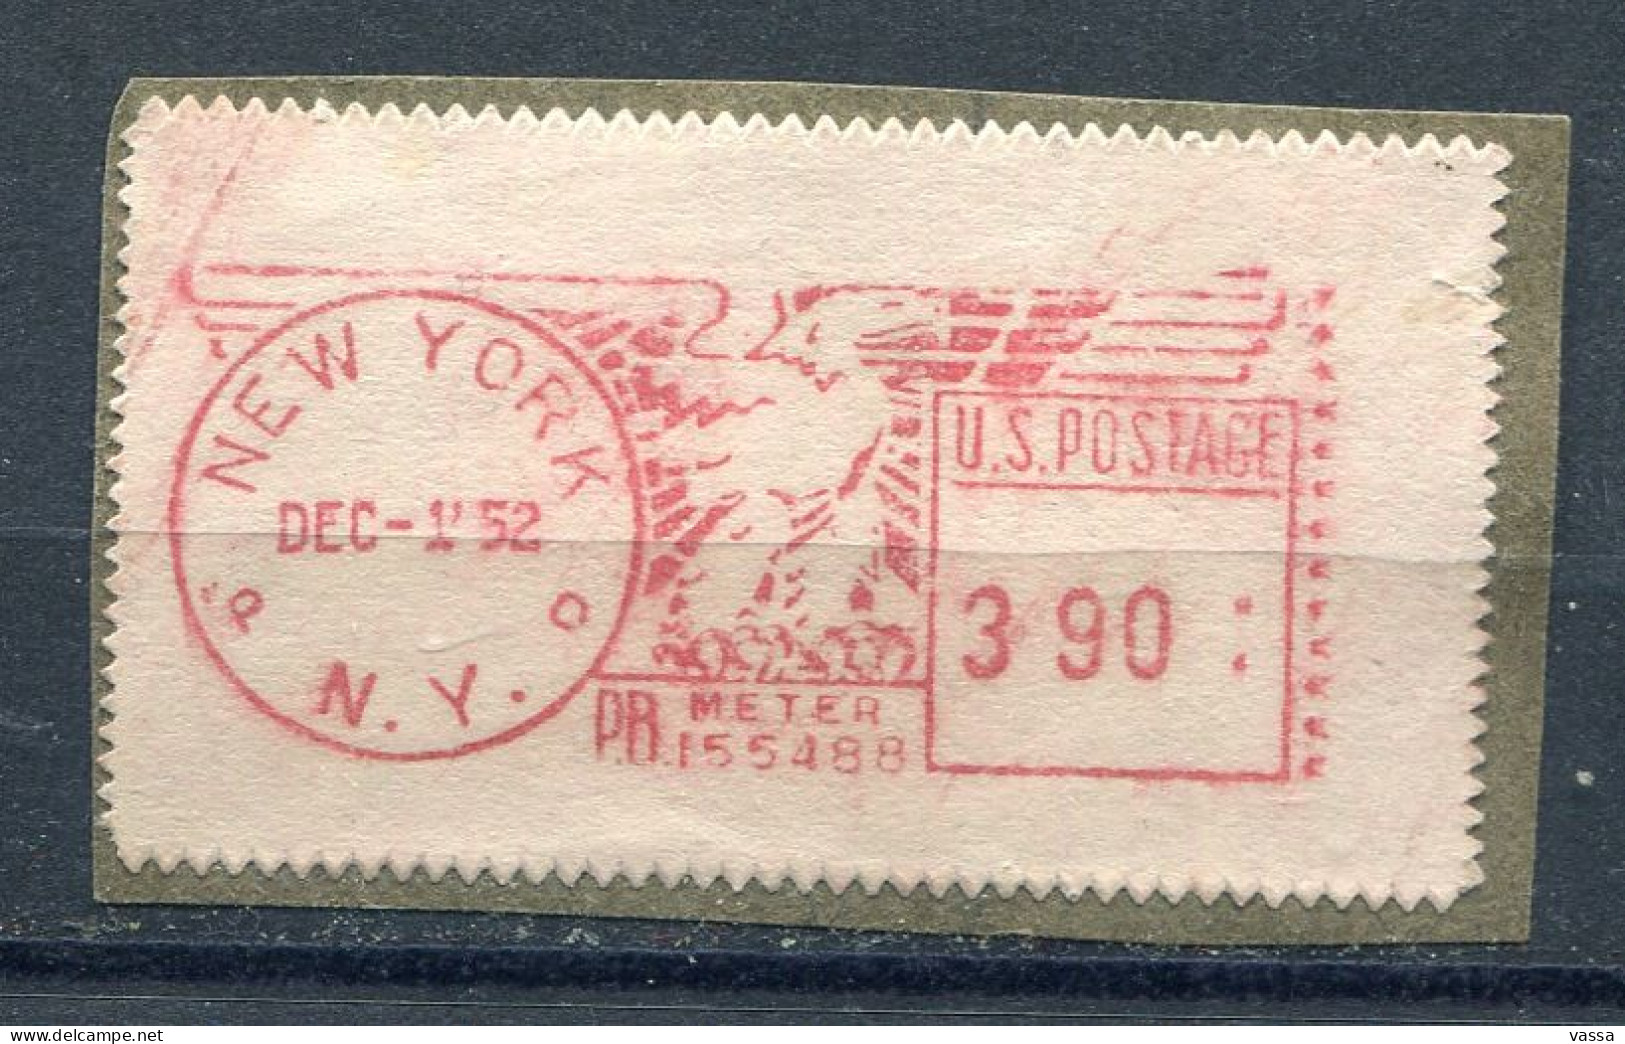 USA -1952 - PB Meter N°155488 PB - New-York  / Fragment- Aigle - Usati